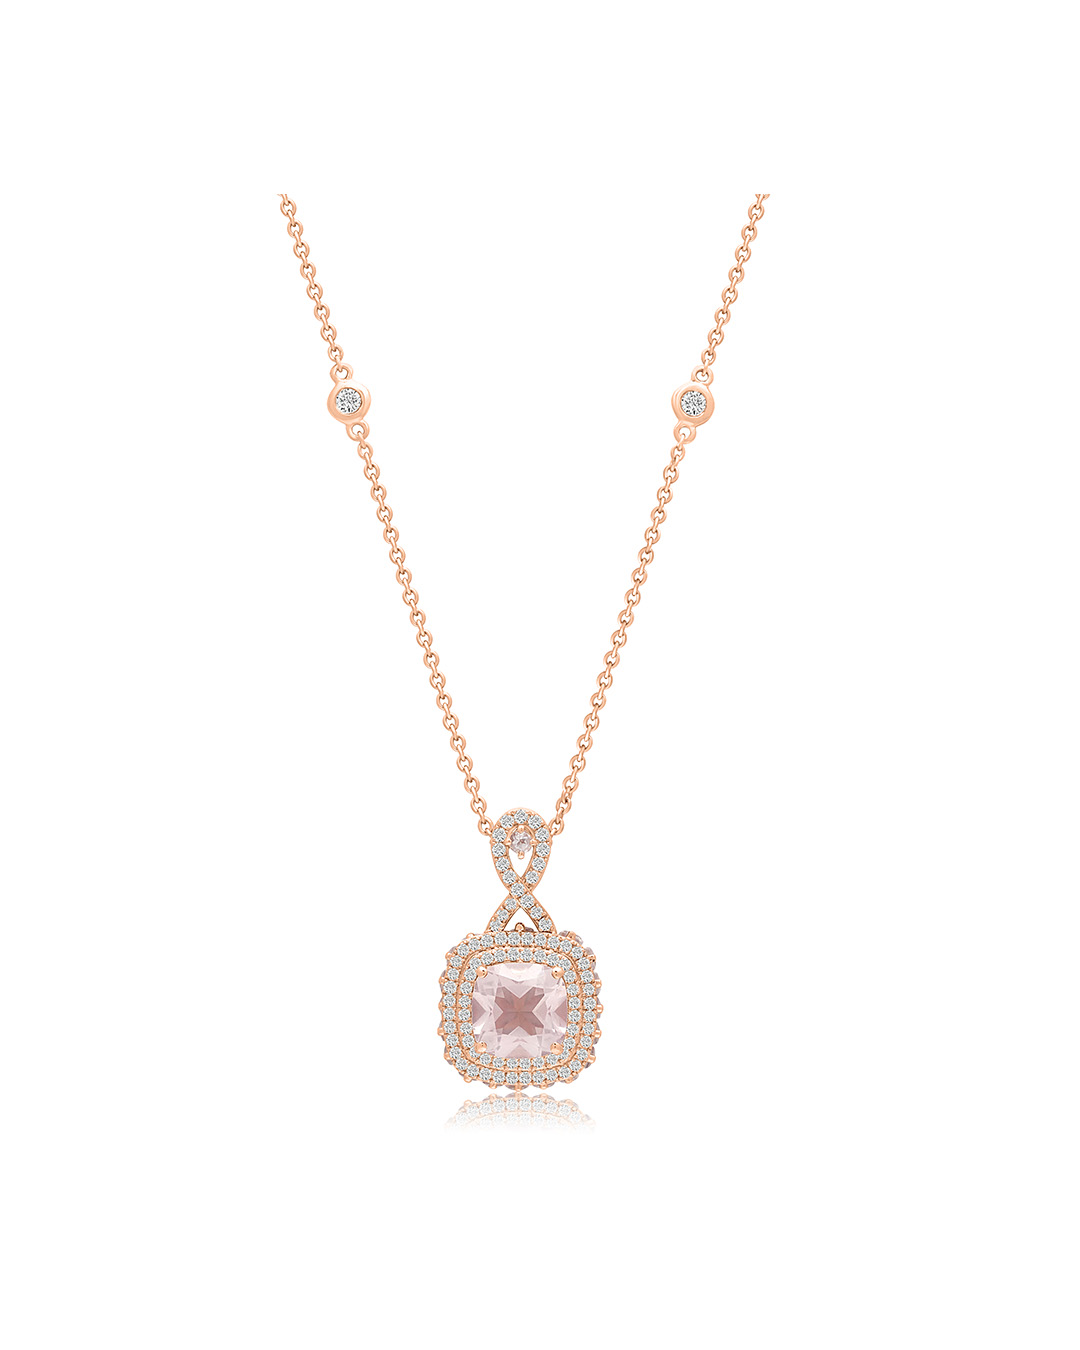 diamond necklace with square pendant